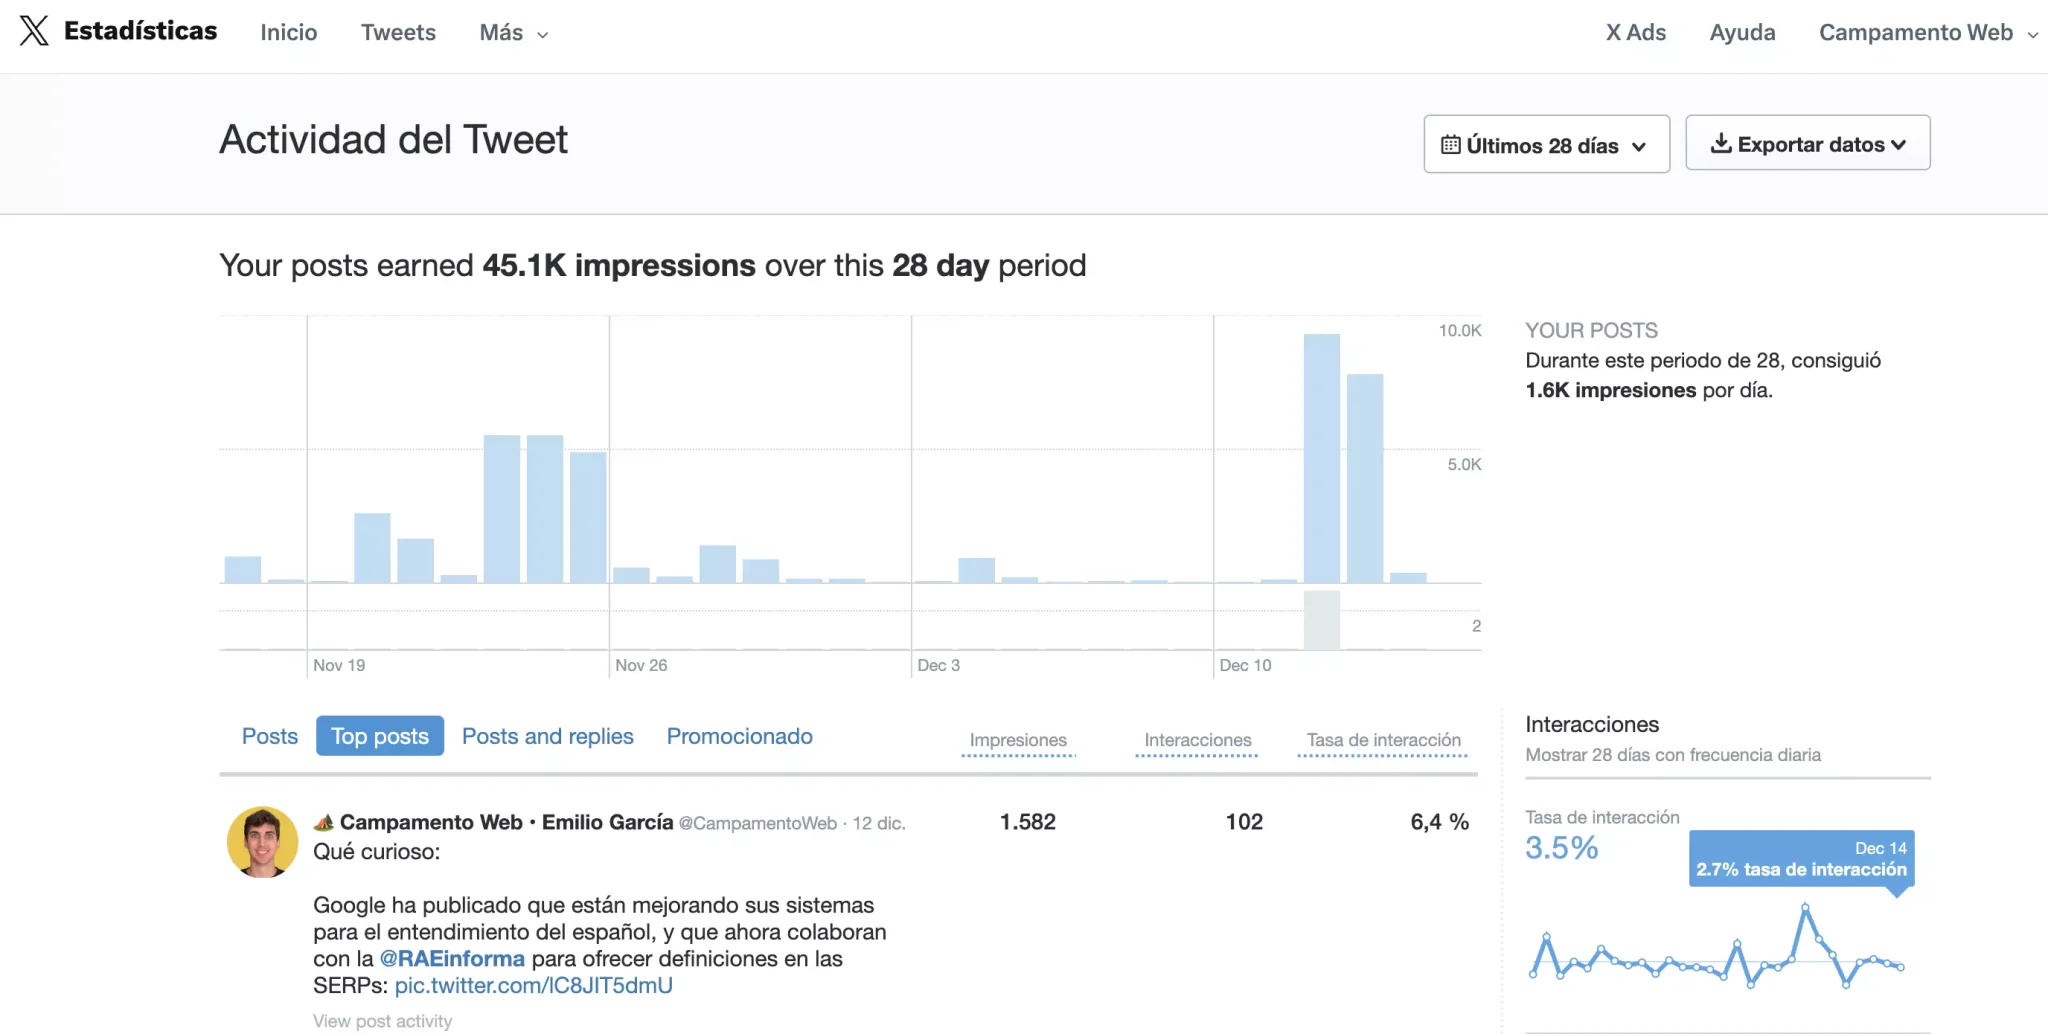 Twitter X Analytics to measure performance